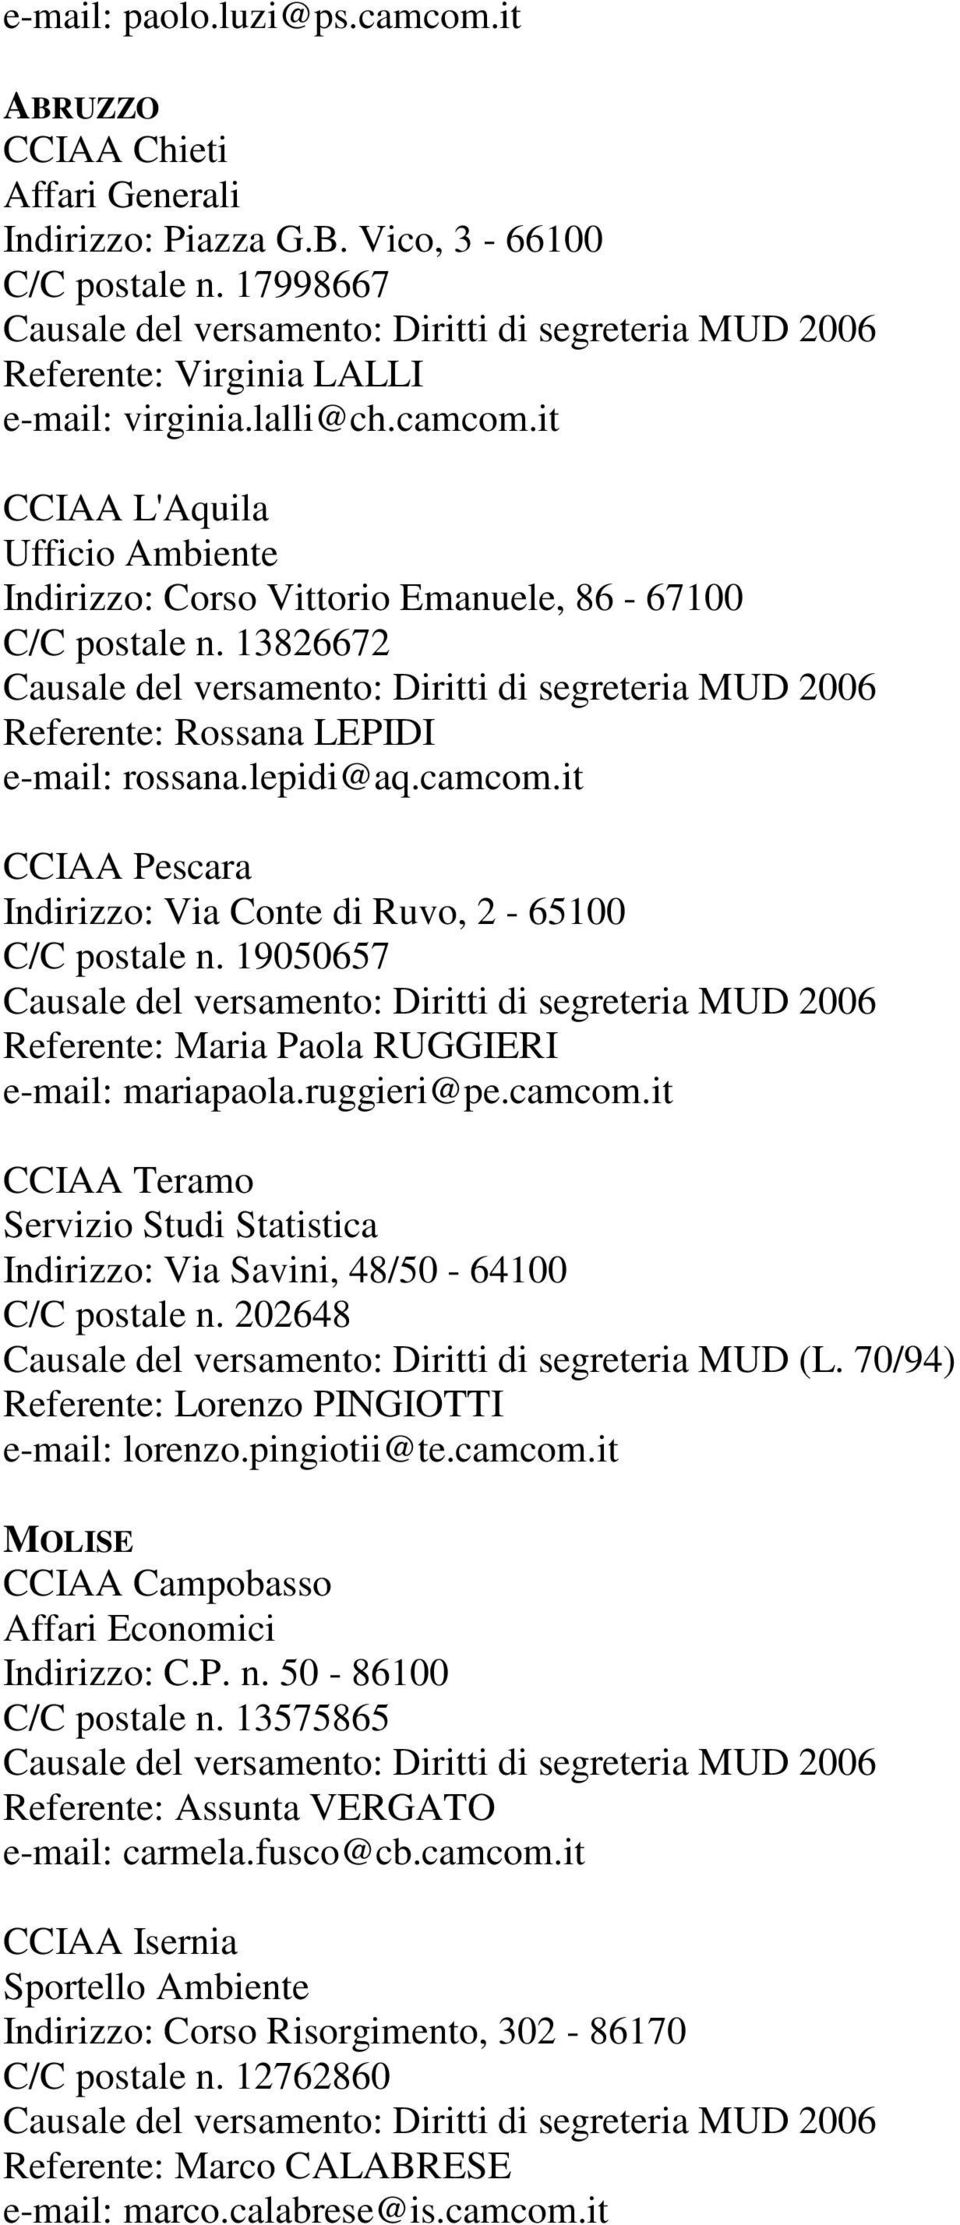 202648 Diritti di segreteria MUD (L. 70/94) Lorenzo PINGIOTTI lorenzo.pingiotii@te.camcom.it MOLISE CCIAA Campobasso Affari Economici C.P. n. 50-86100 C/C postale n. 13575865 Assunta VERGATO carmela.